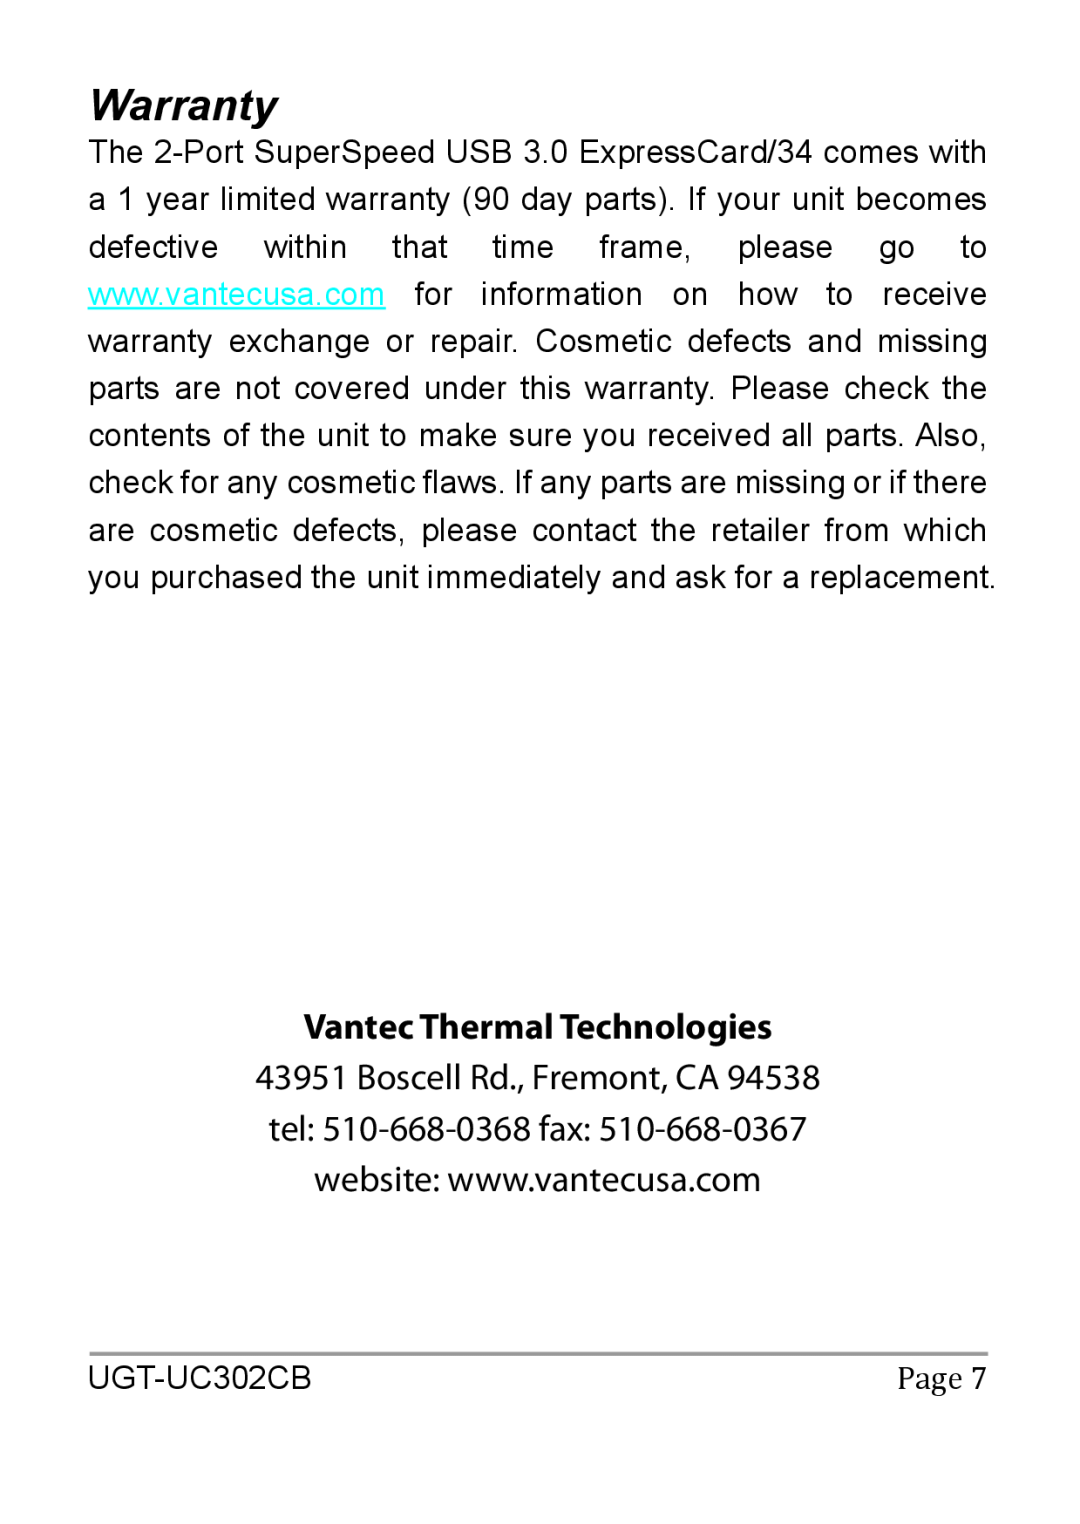 Vantec UGT-UC302CB user manual Warranty, Vantec Thermal Technologies, Page 